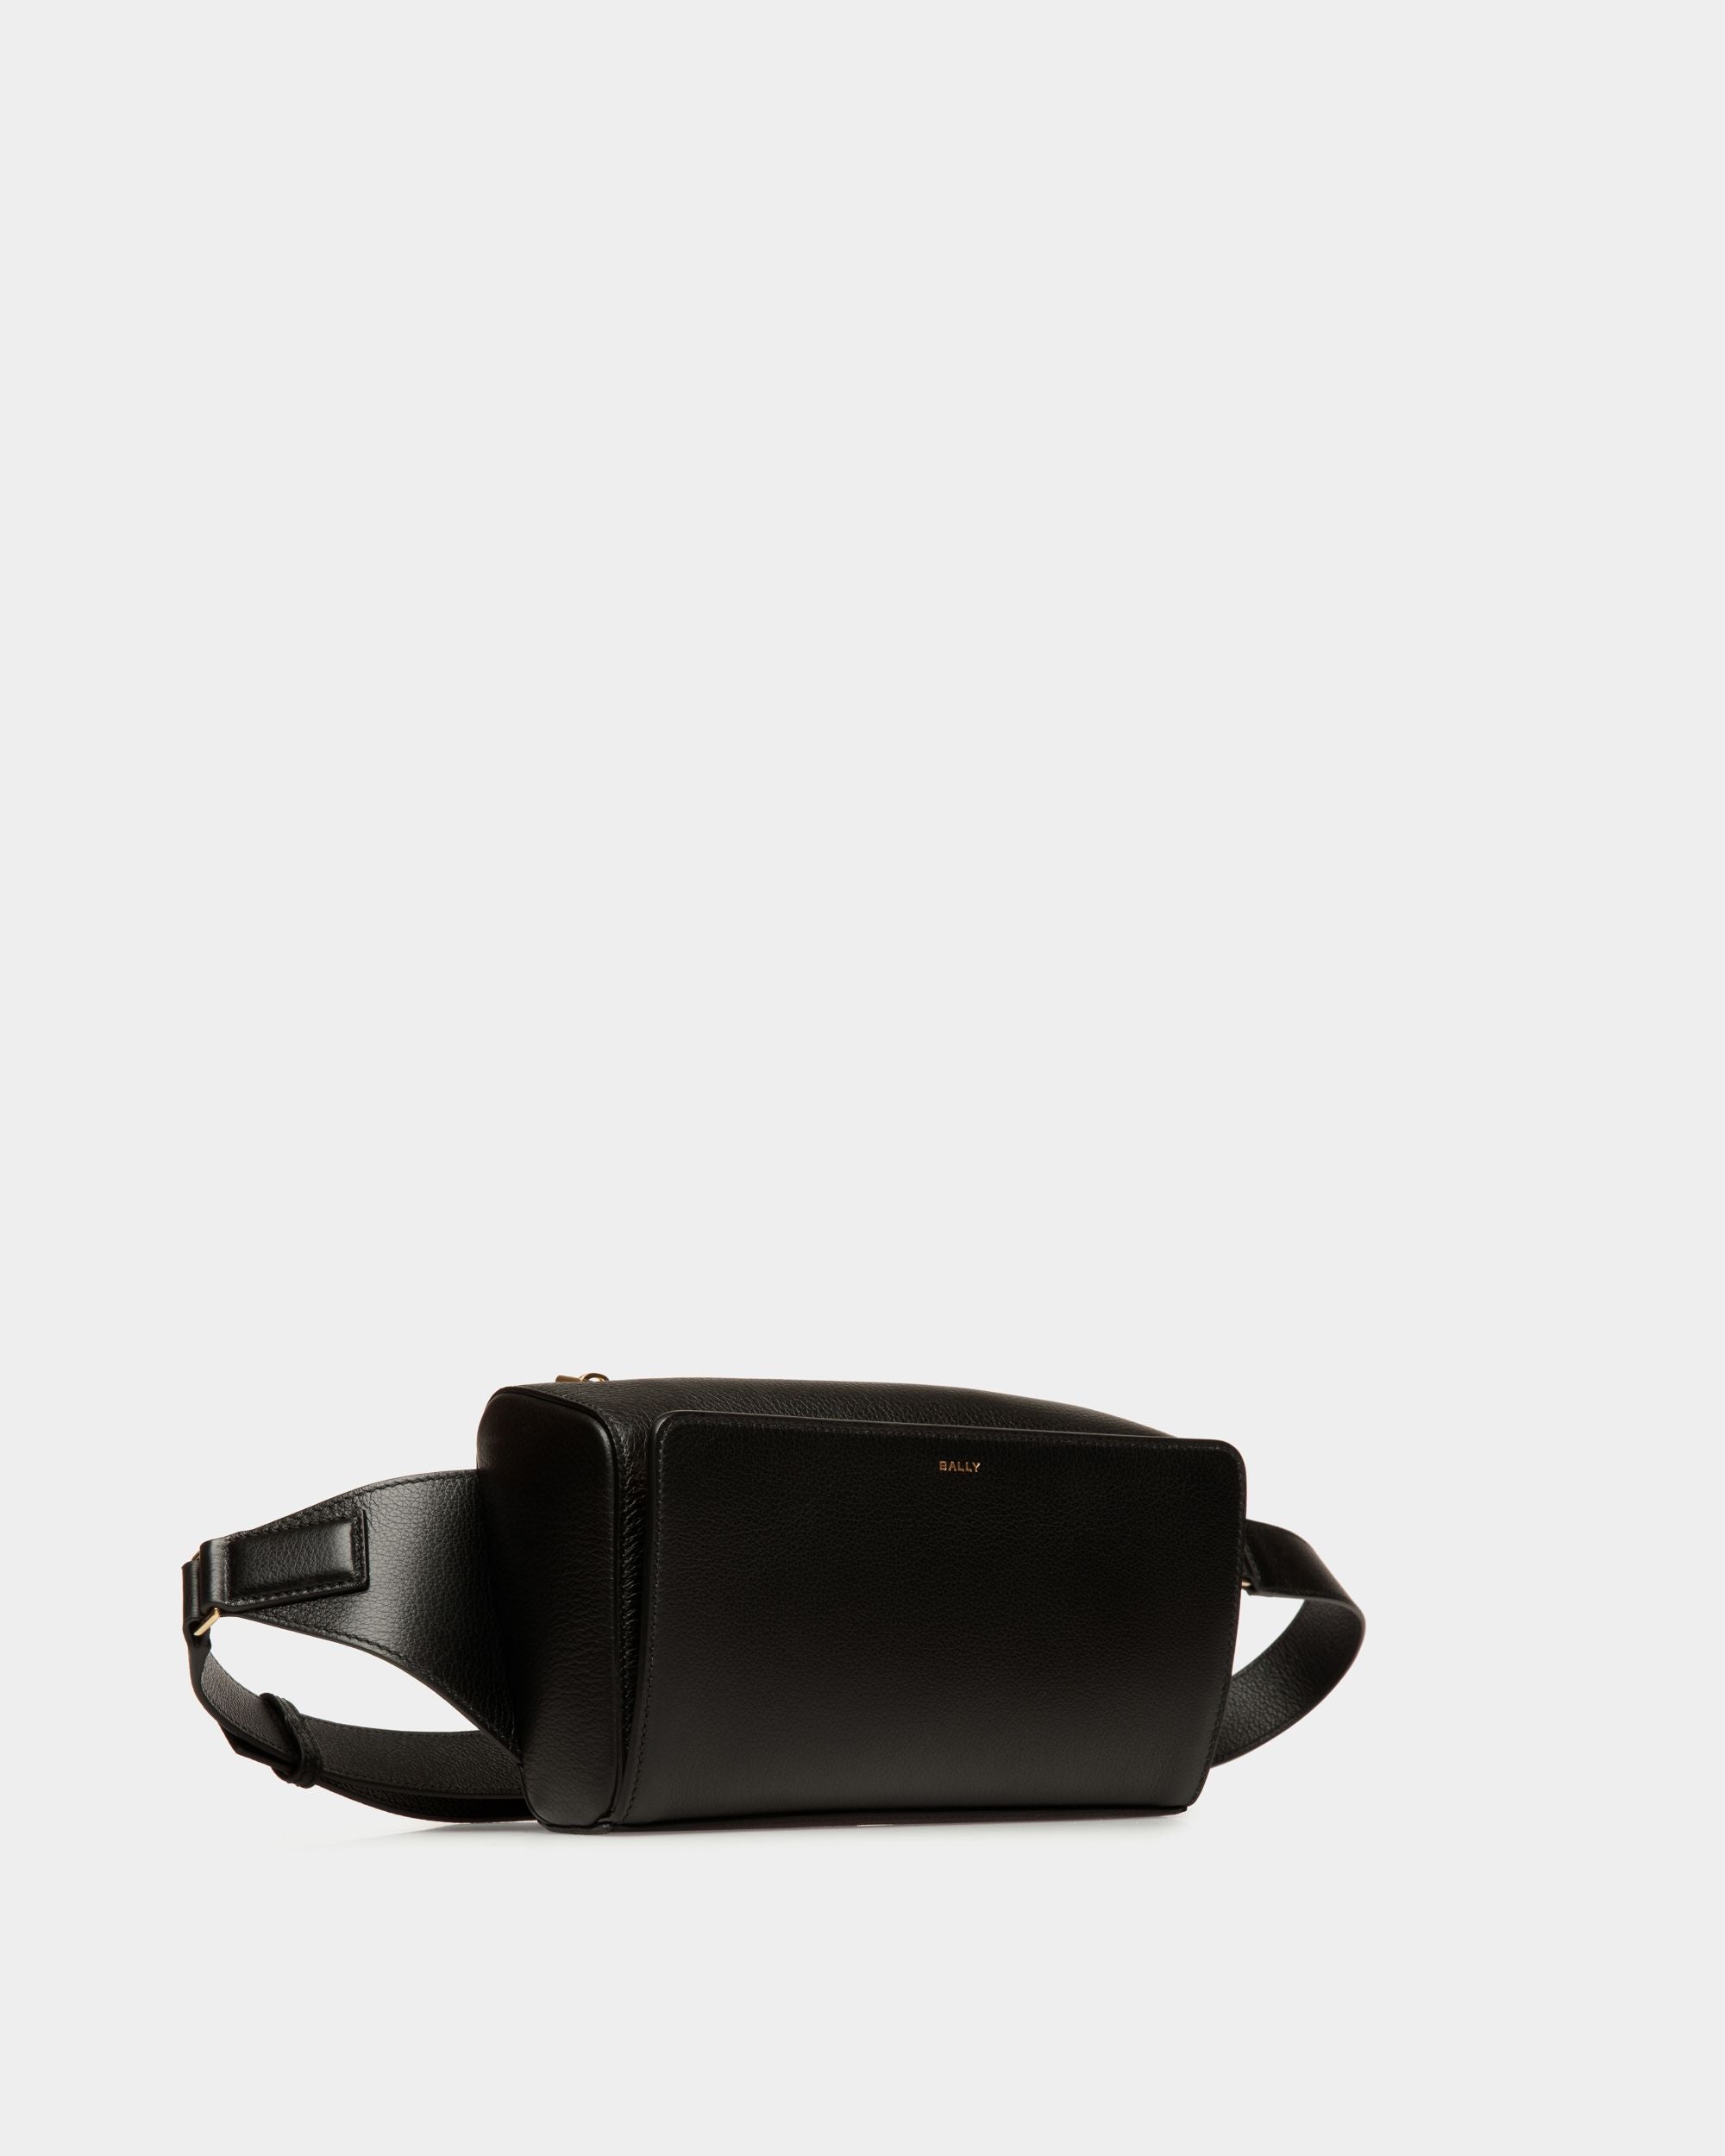 Arkle | Men's Belt Bag in Black Grained Leather | Bally | Still Life 3/4 Front